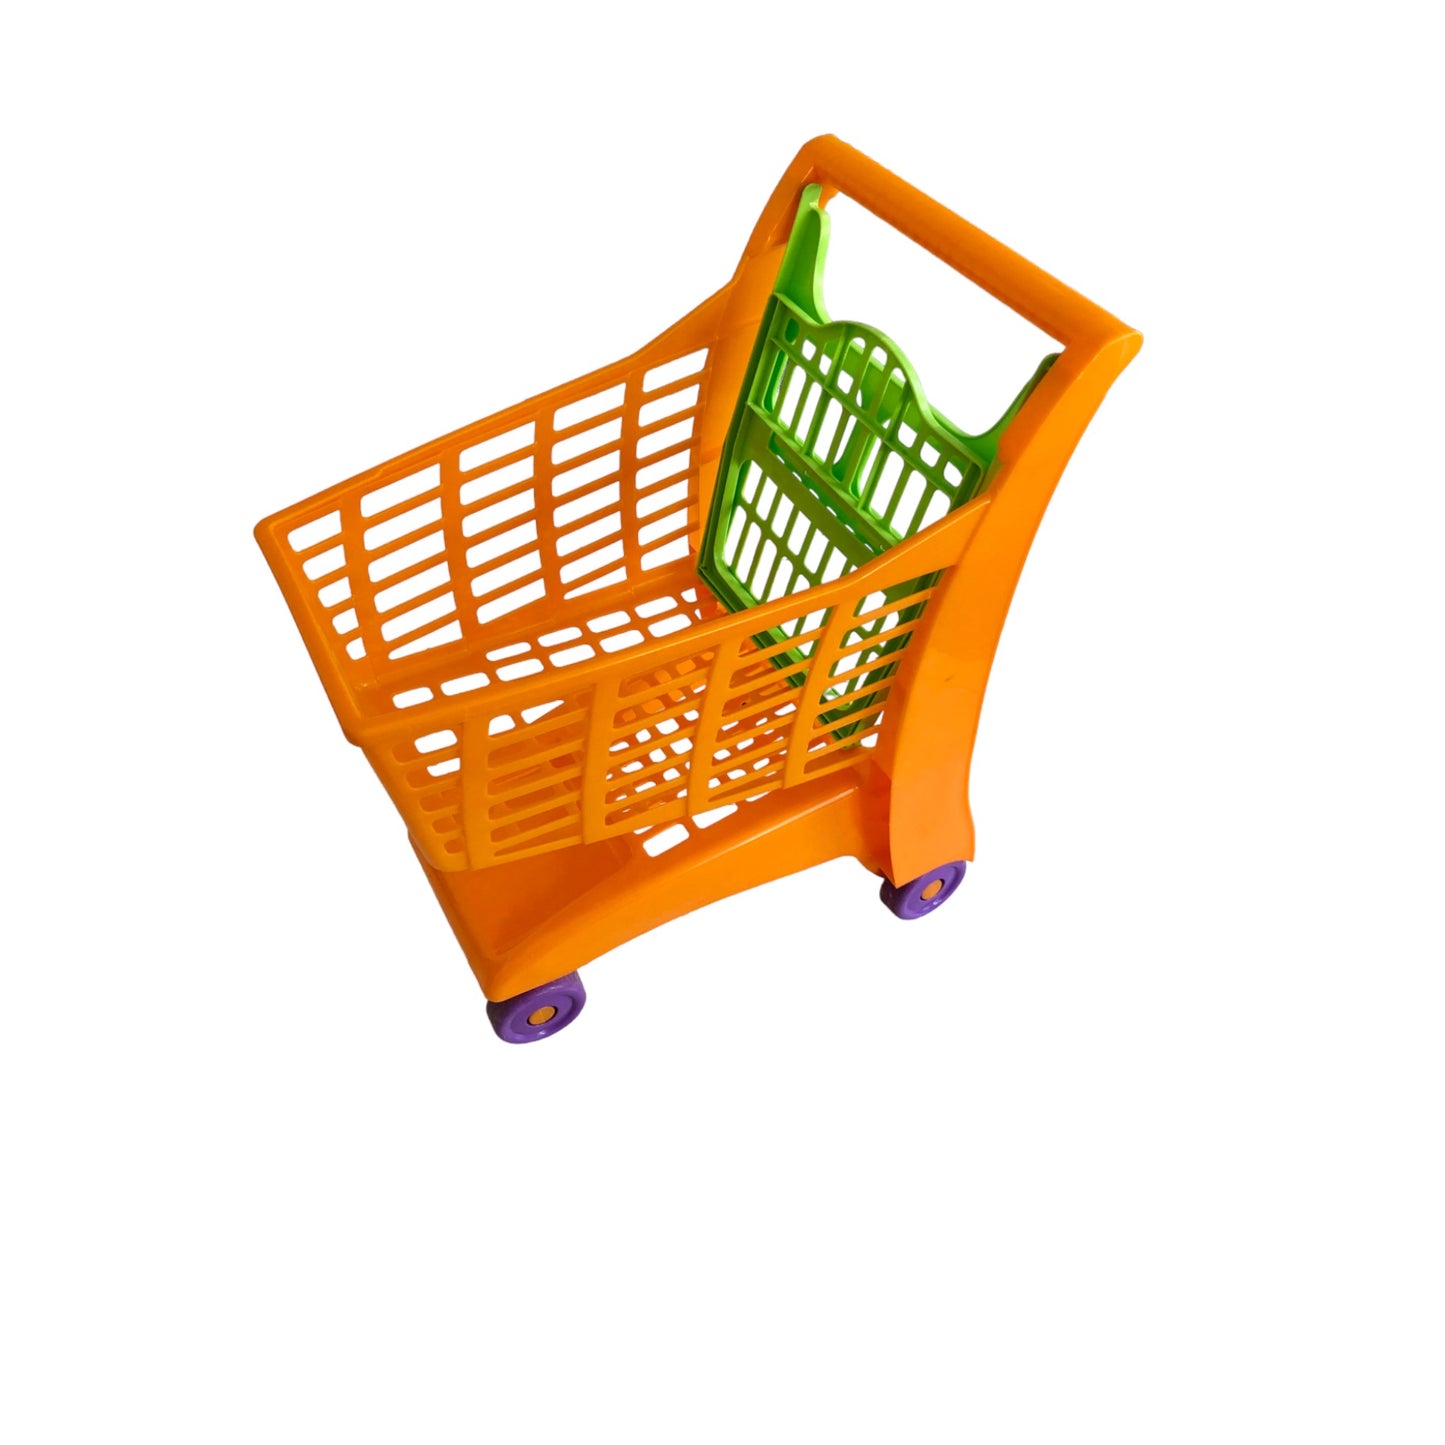 Supermarket trolley toy - Pretend play